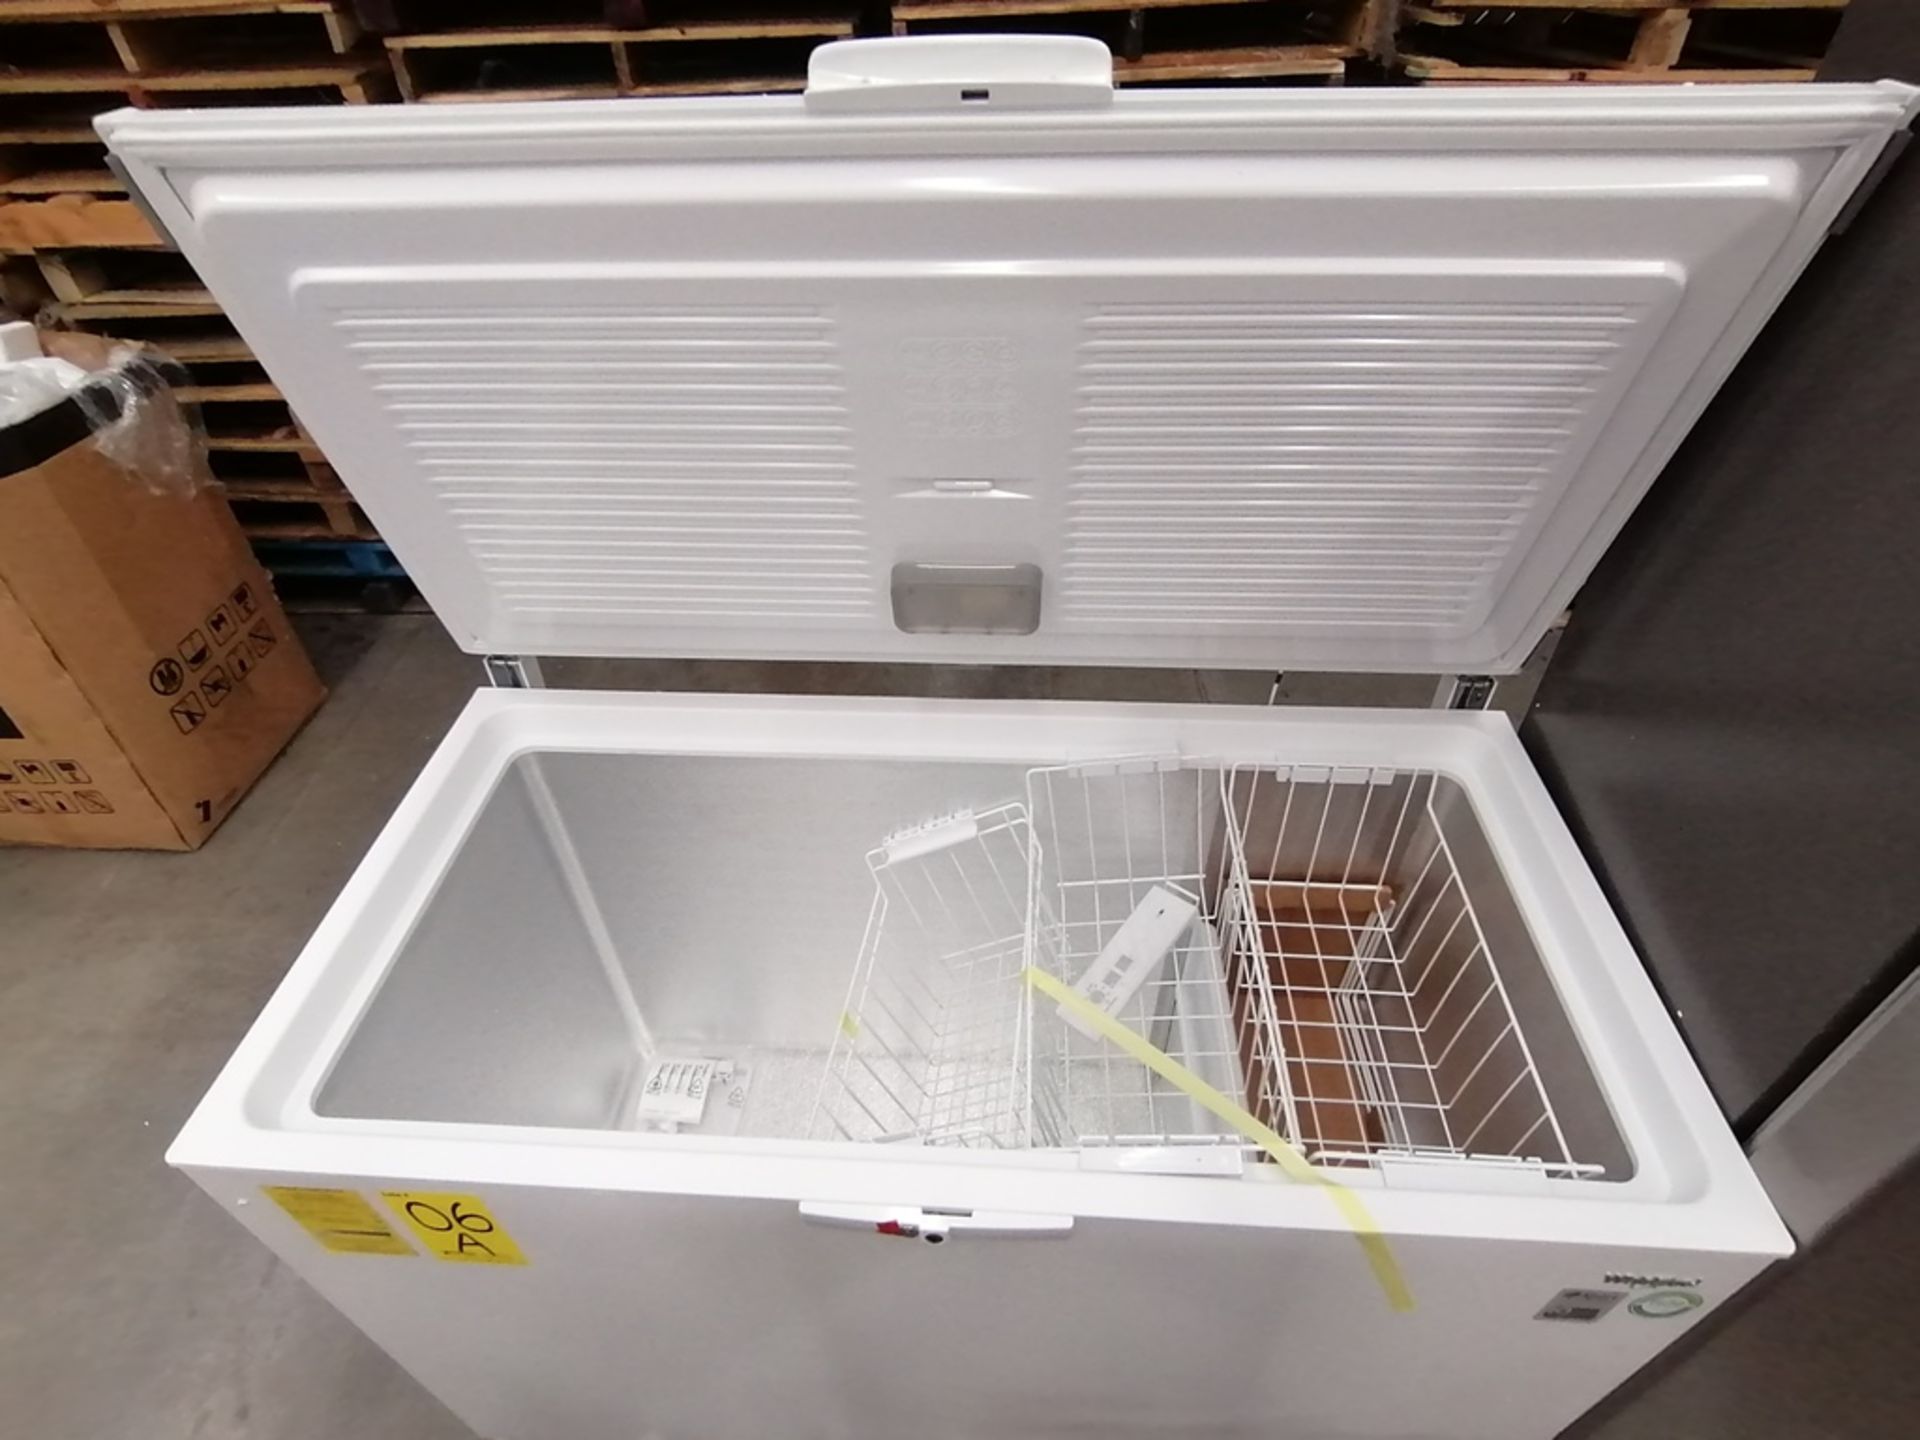 1 Congelador horizontal marca Whirlpool, Modelo WC16016Q, Serie 754959966031, Color Blanco, Golpead - Image 7 of 9